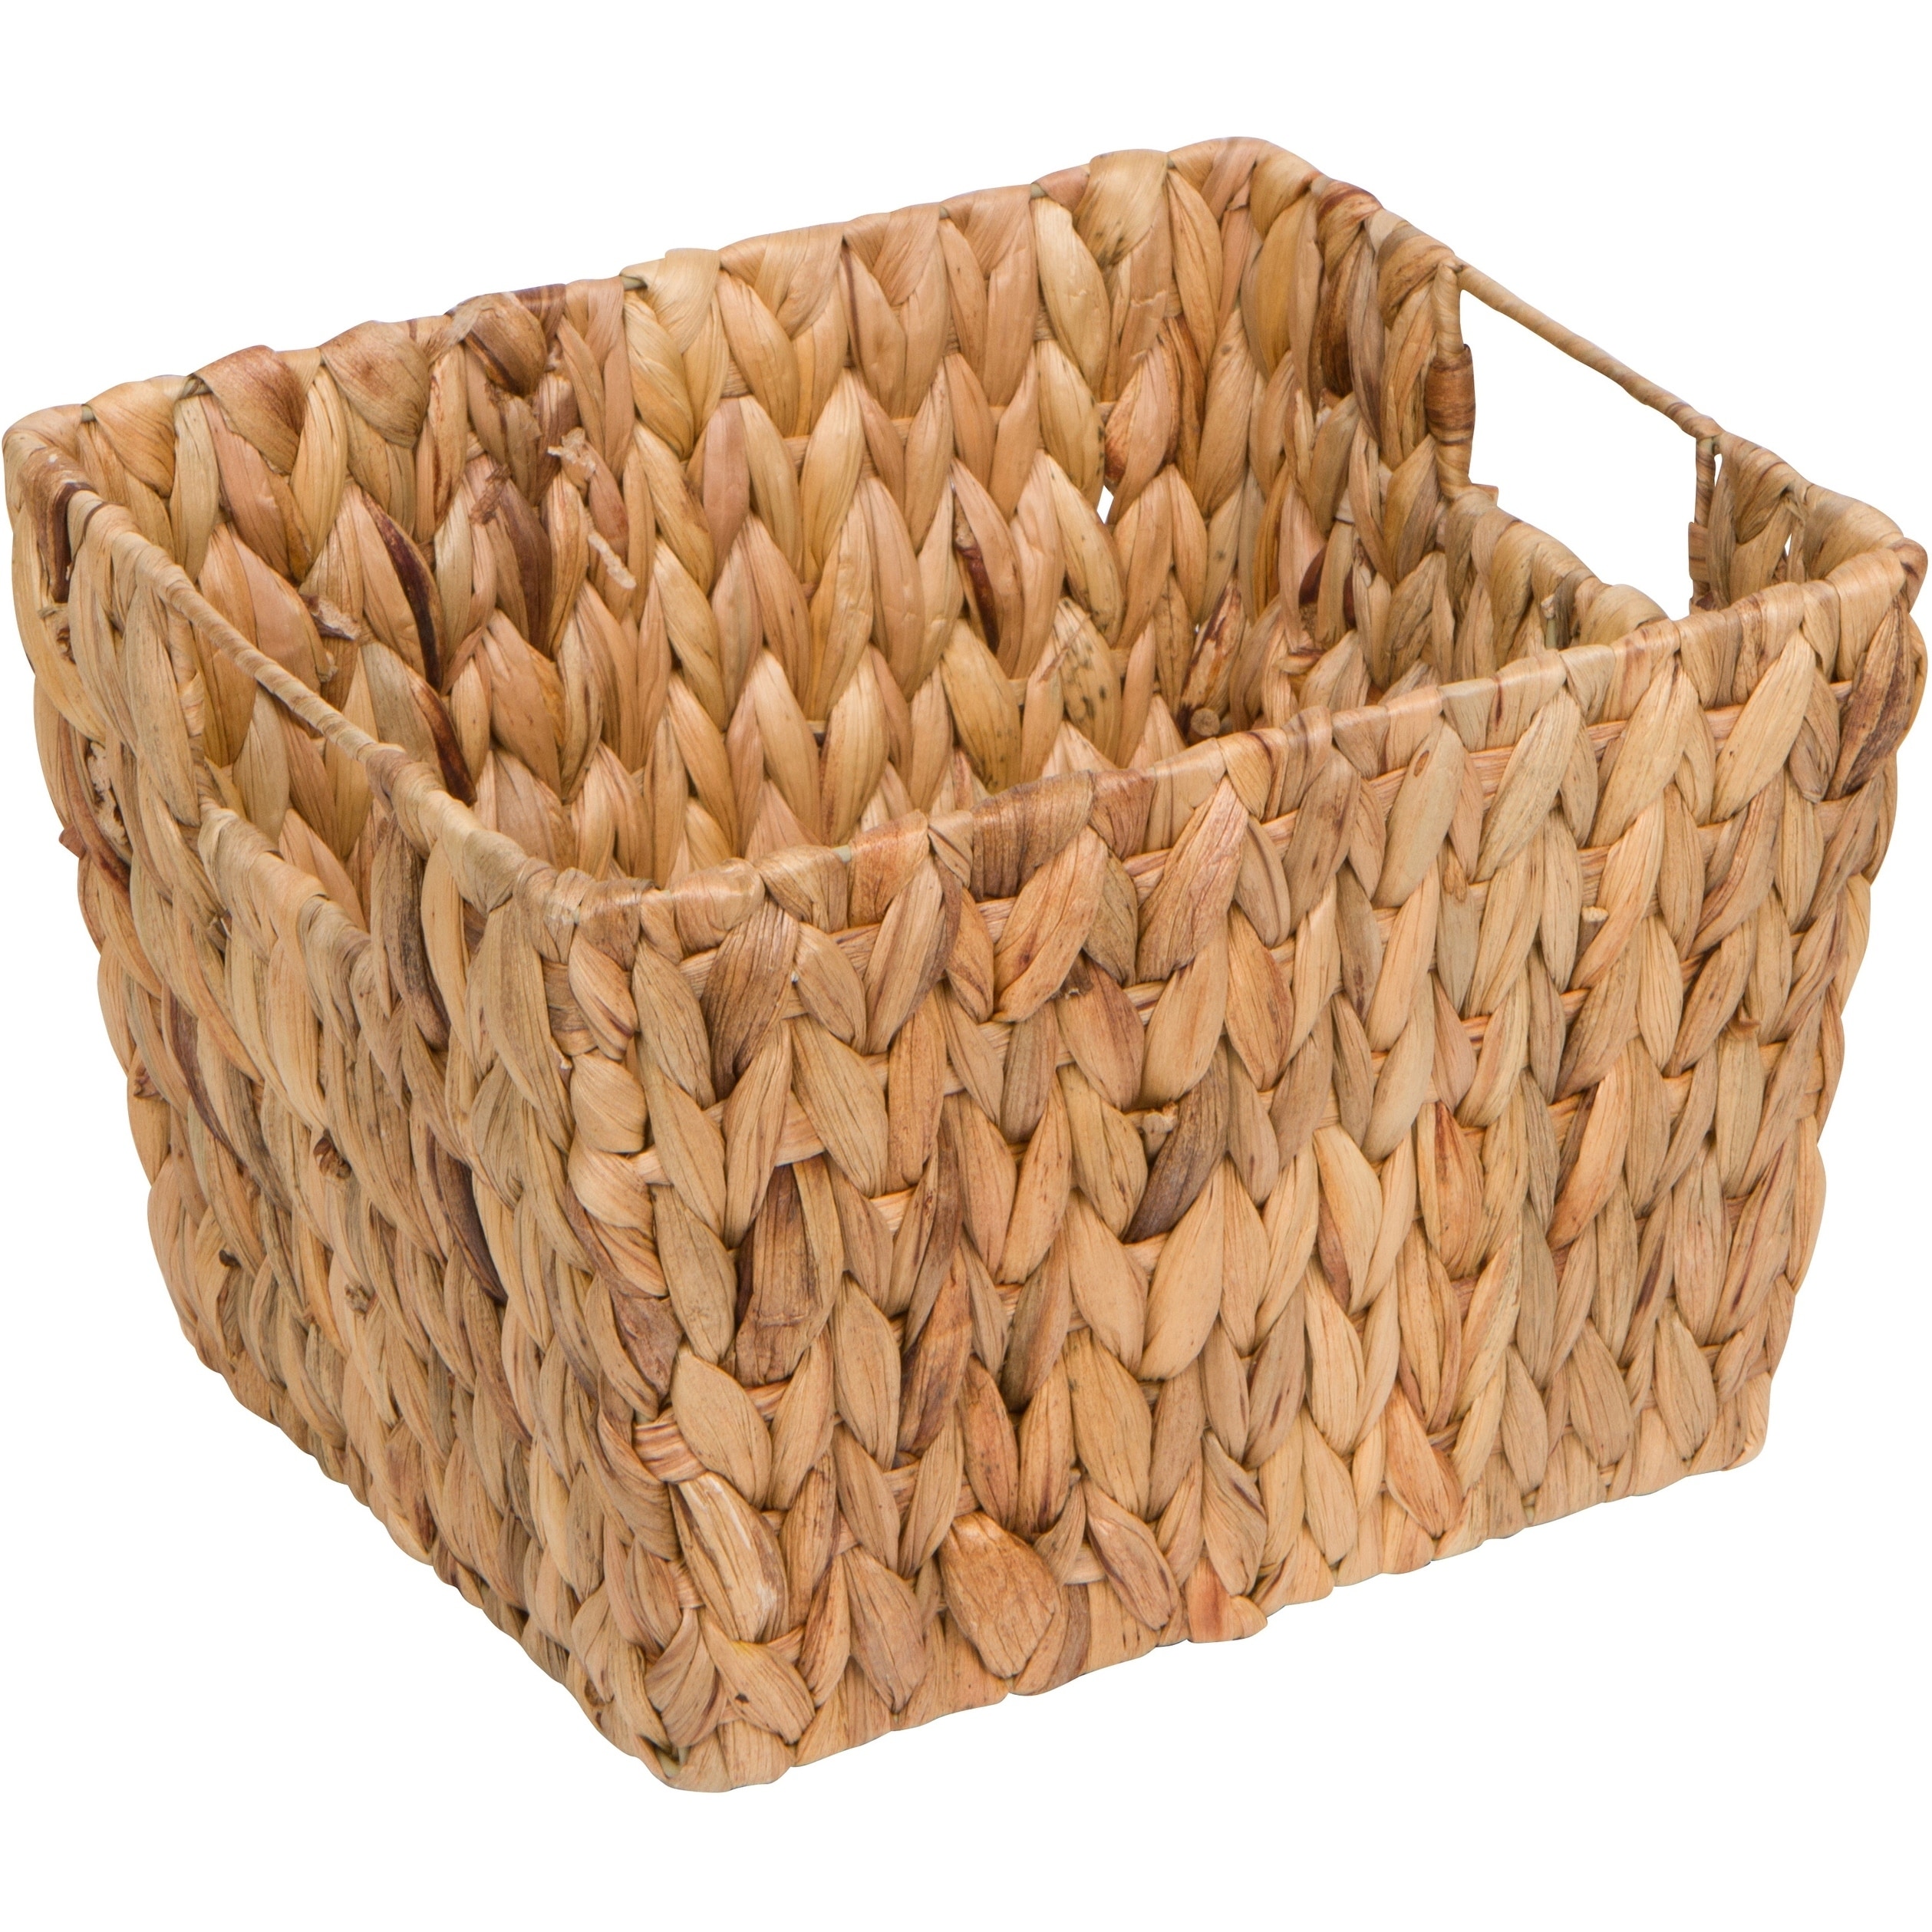 https://ak1.ostkcdn.com/images/products/18104855/11.5-Hyacinth-Storage-Basket-with-Handles-Rectangular-by-Trademark-Innovations-f8abe3c9-40ab-4707-b244-73e01b17d361.jpg